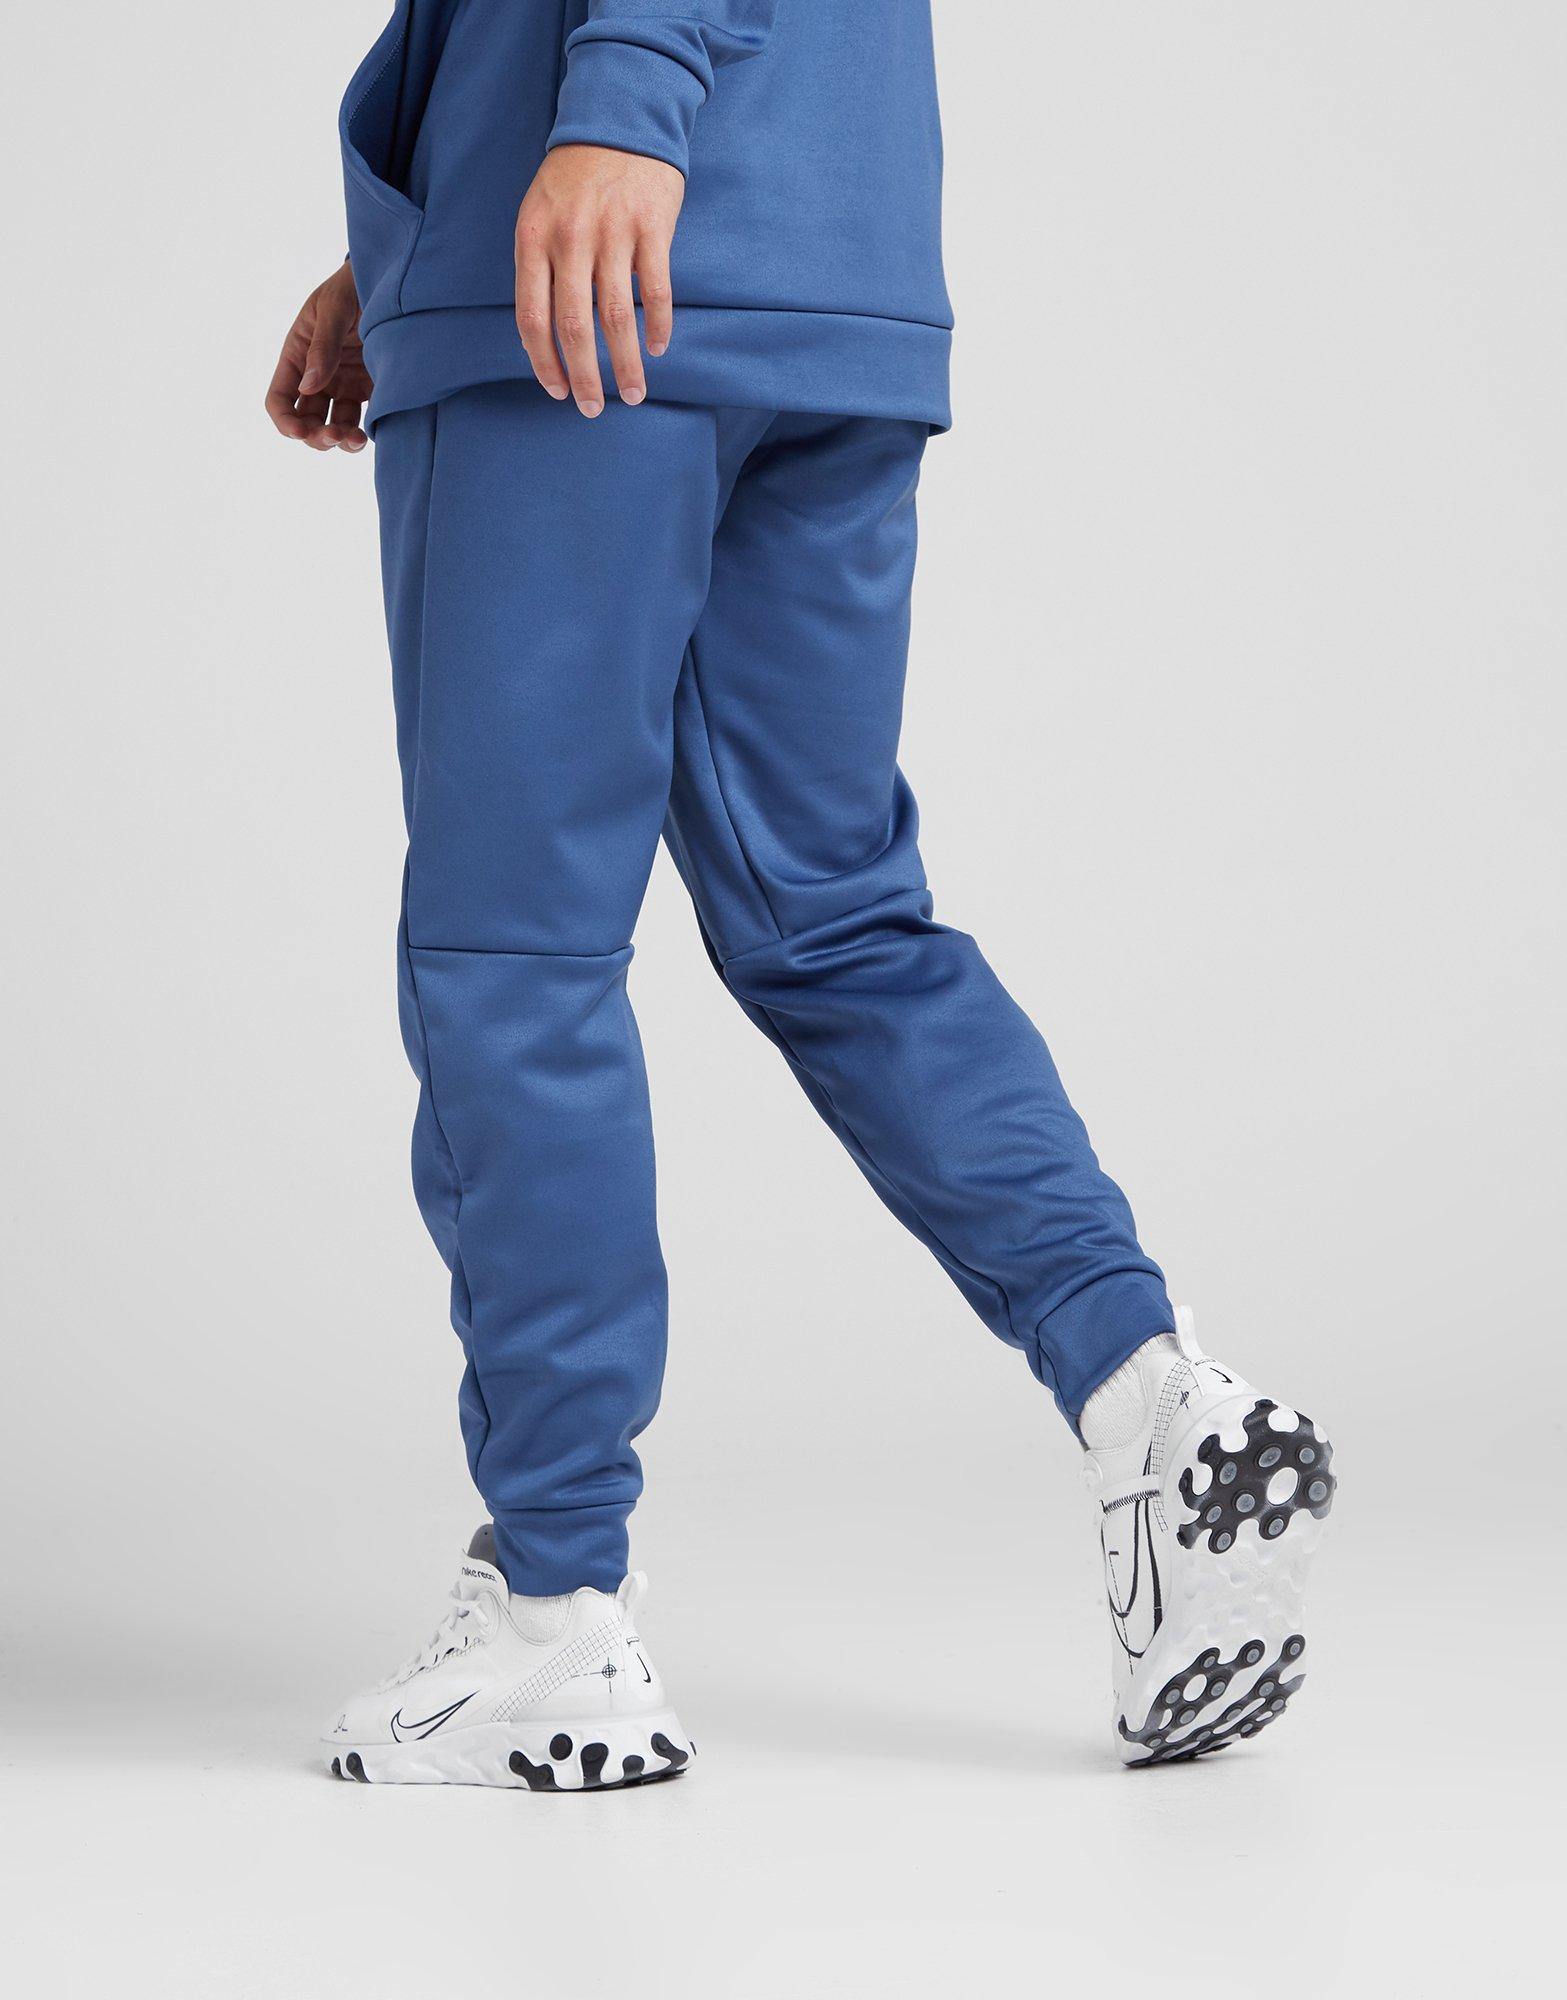 blue nike track pants